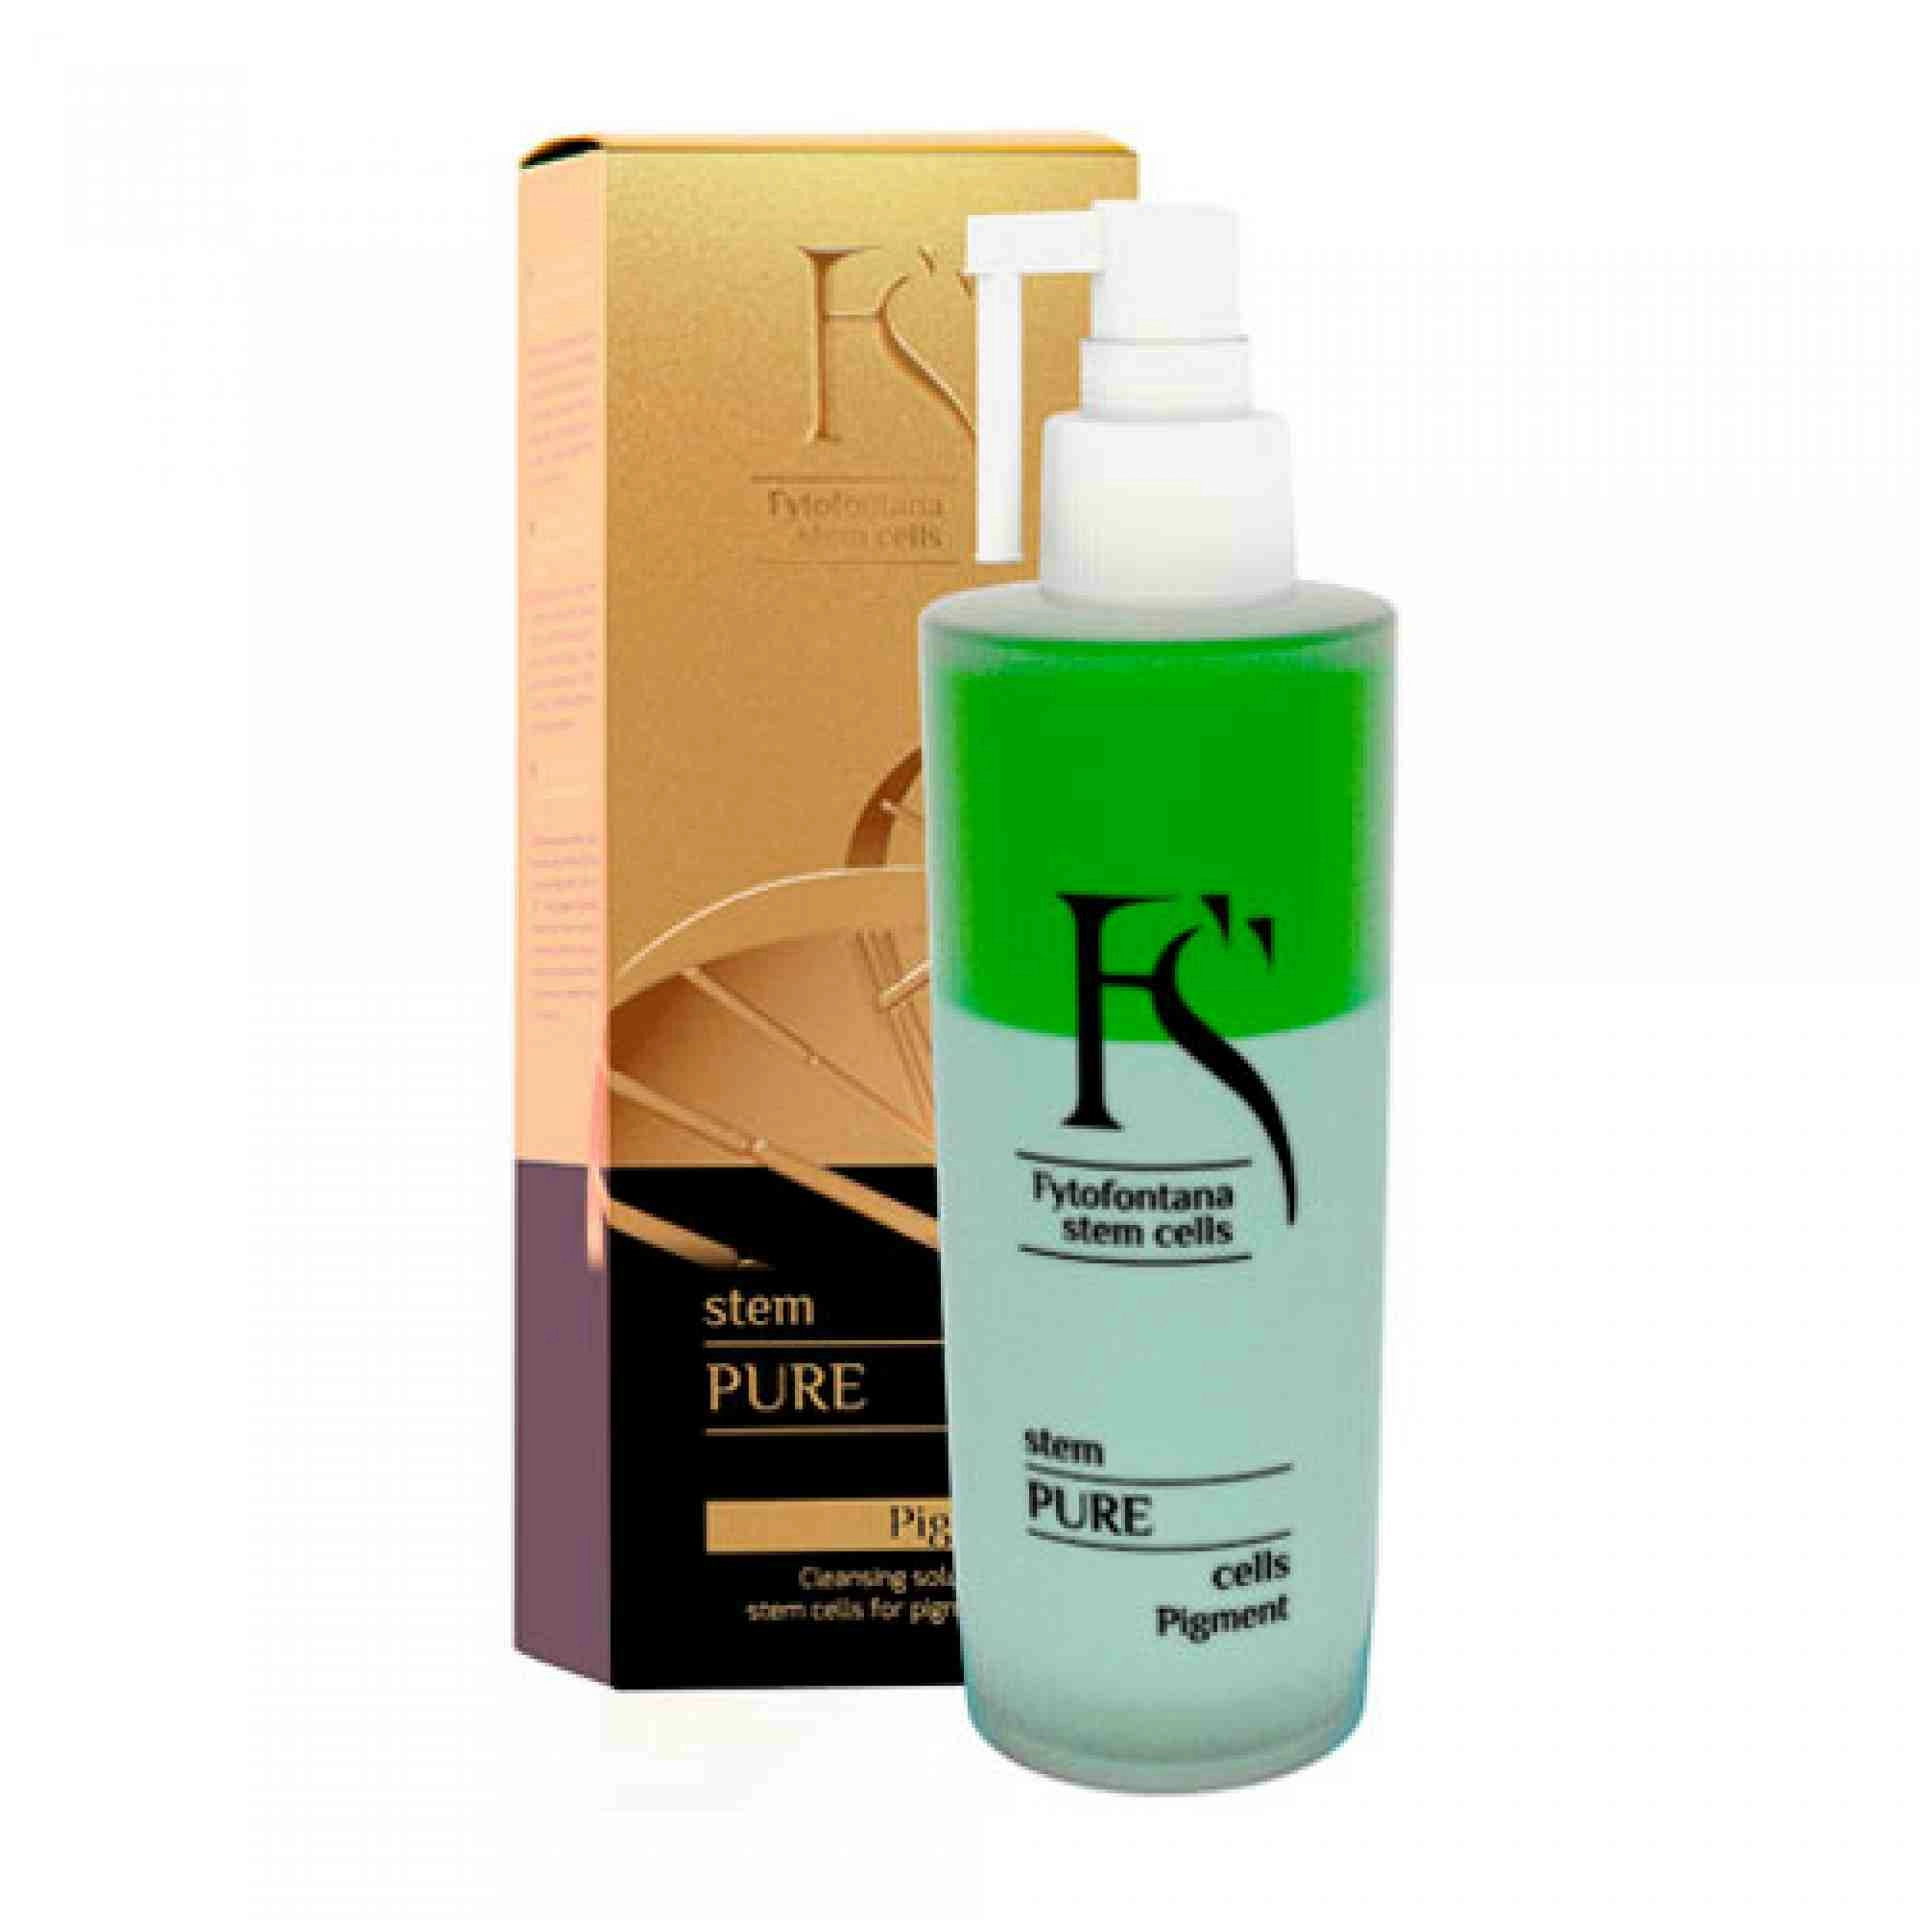 FS Pure Pigment | Limpiador despigmentante 125ml - Stem Cells - Fytofontana Cosmeceuticals ®